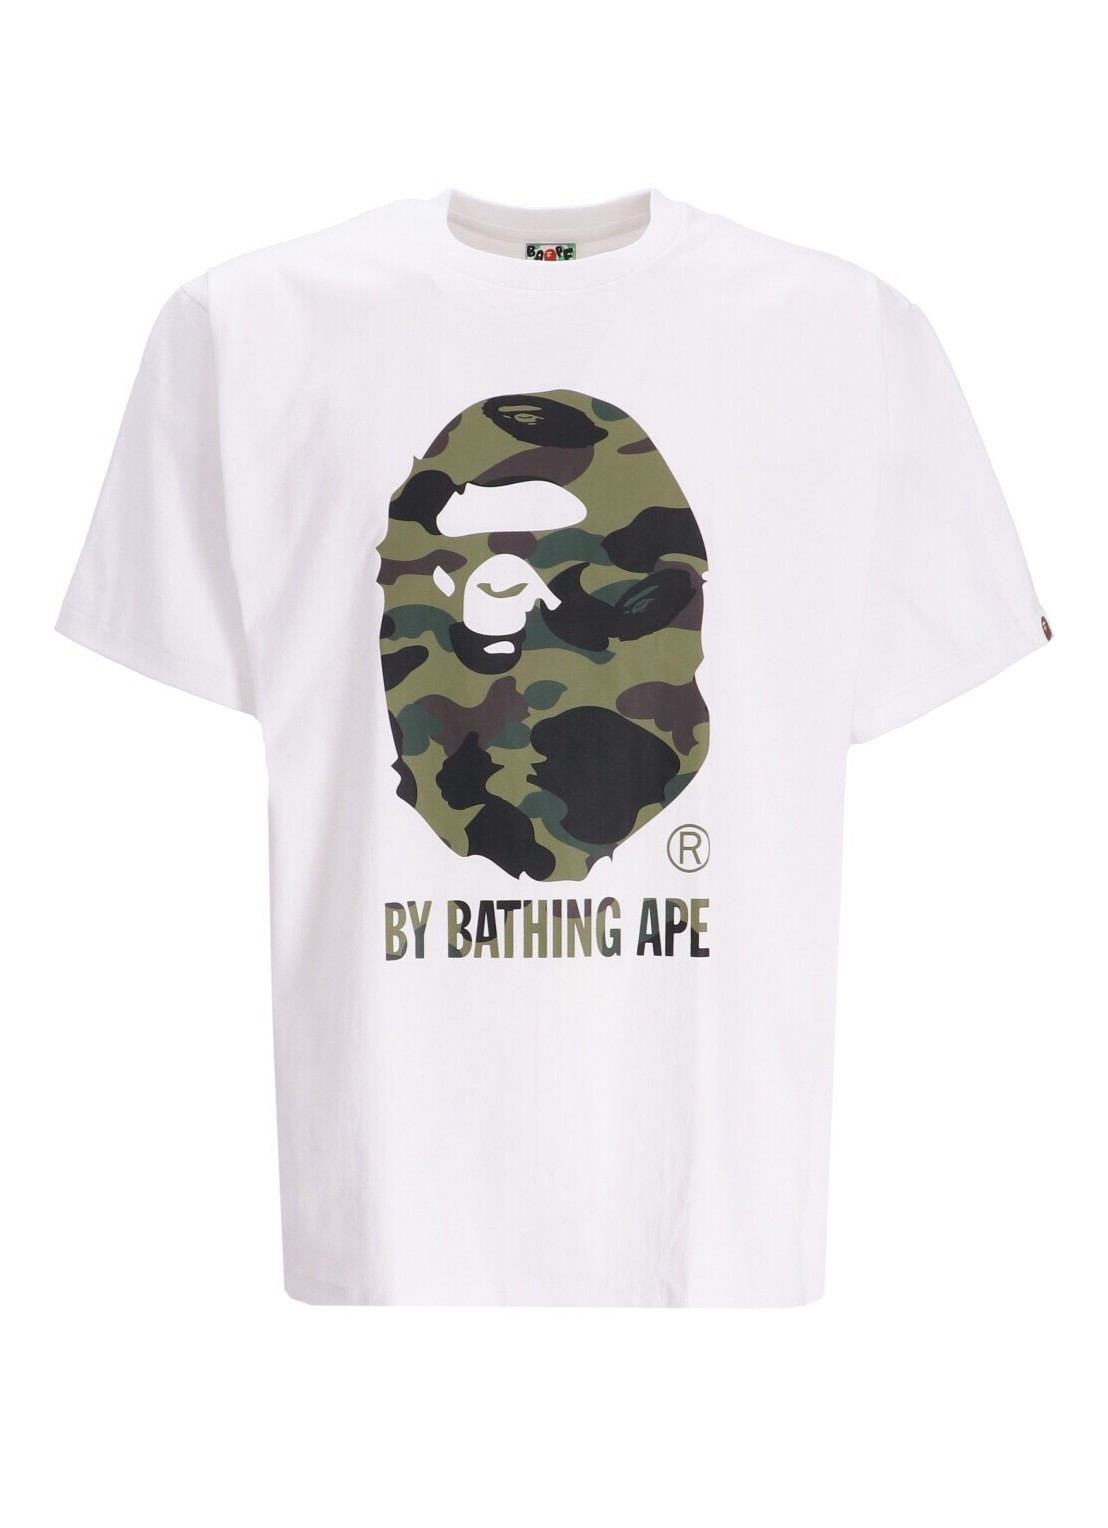 Camiseta bape t-shirt man 1st camo by bathing ape tee m 001tei801009m whxgr talla 3XL
 